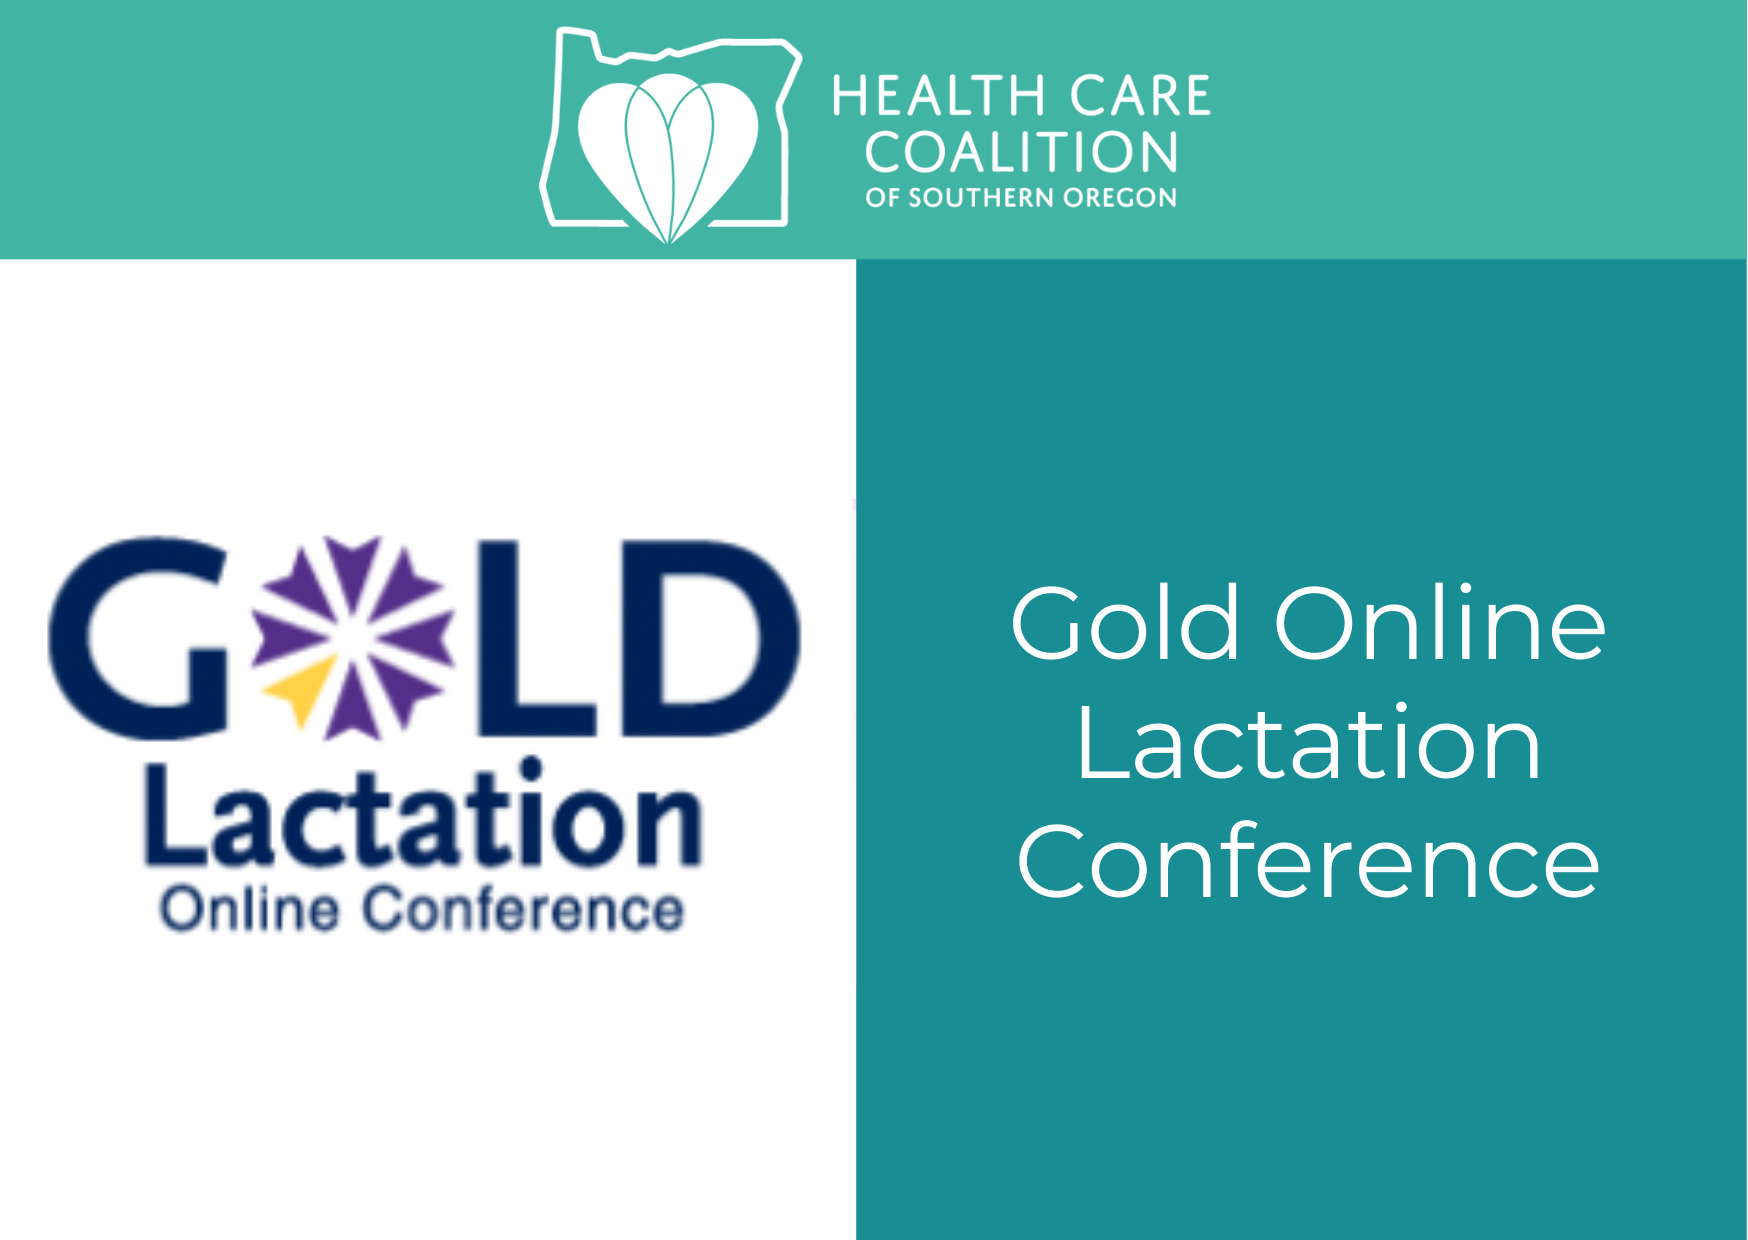 Gold Online Lactation Conference